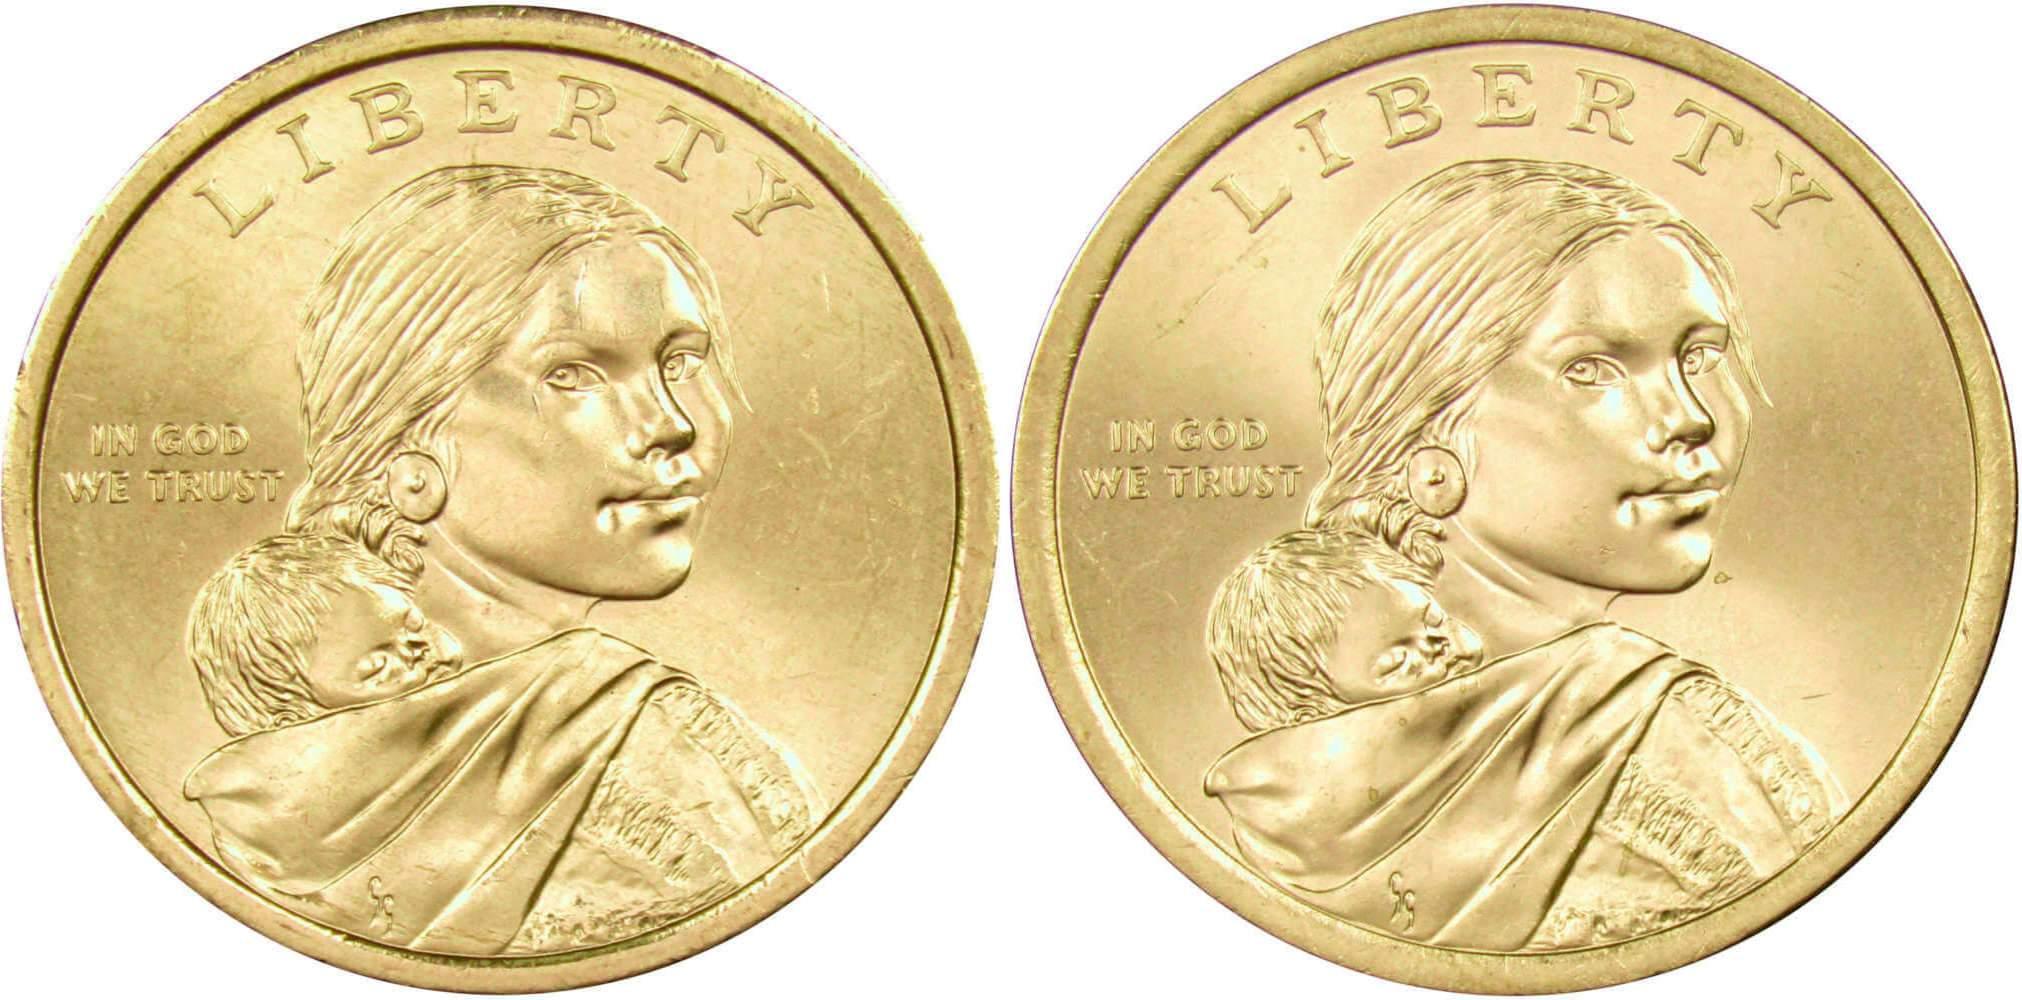 2014 P&D Native Hospitality Native American Dollar 2 Coin Set BU Uncirculated $1